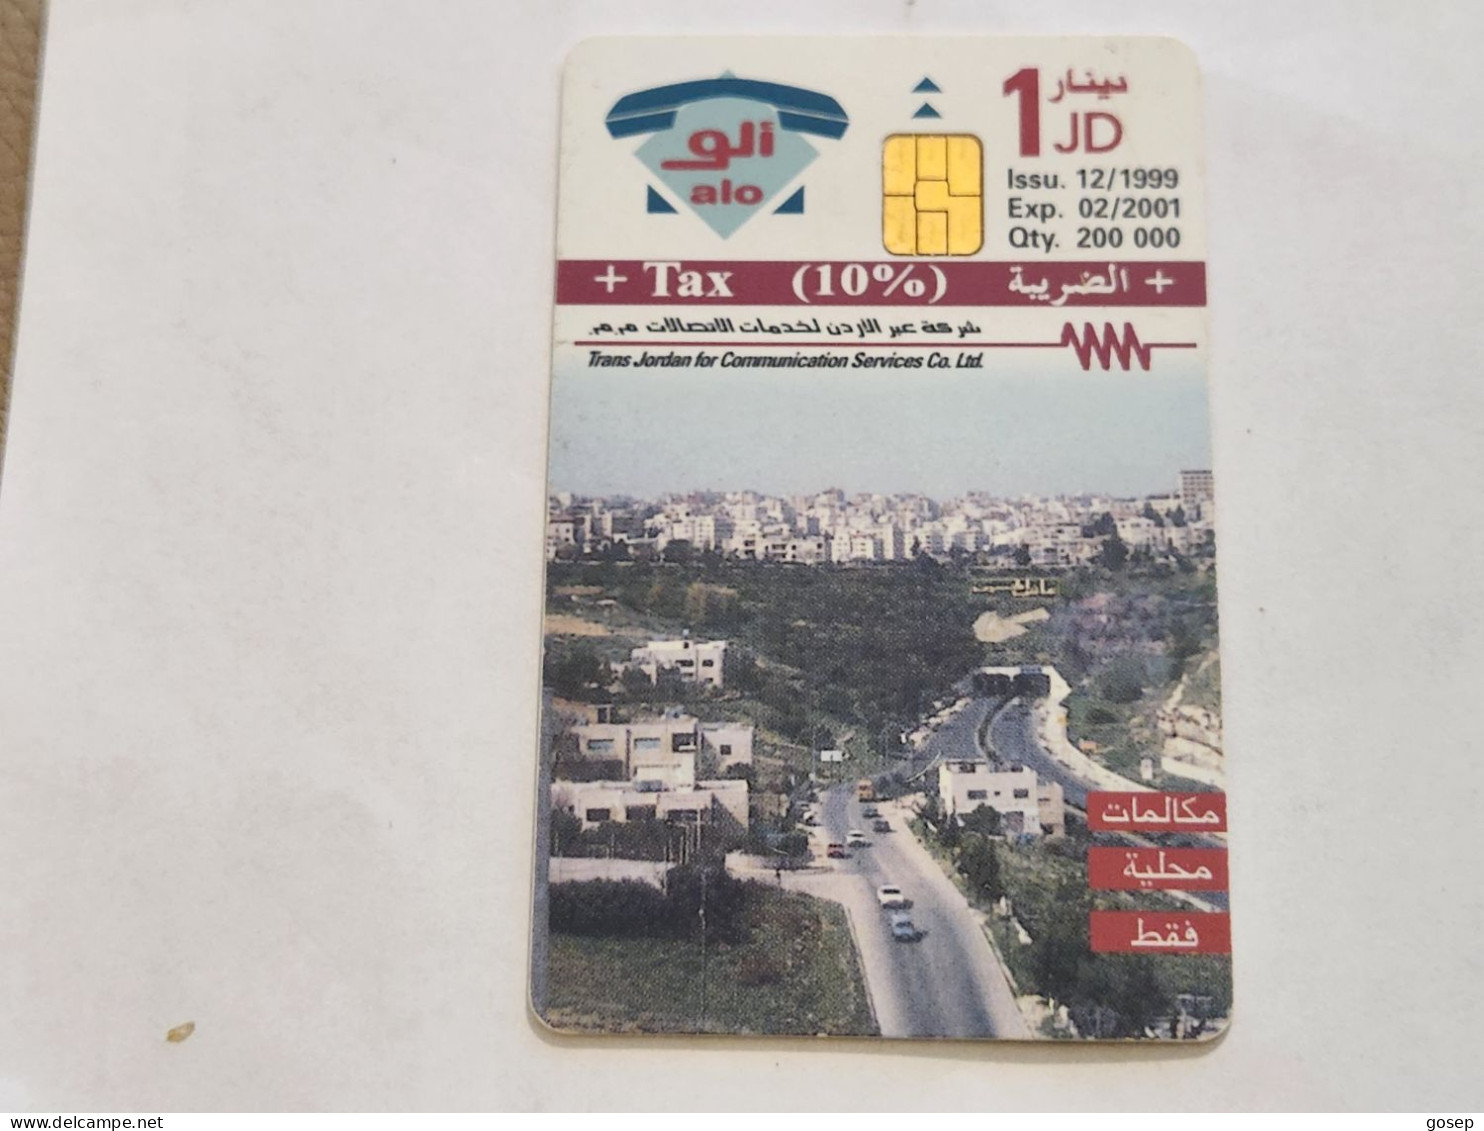 JORDAN-(JO-ALO-0073)-The Cave-Amman-(194)-(1003-399317)-(1JD)-(02/2001)-used Card+1card Prepiad Free - Jordanien